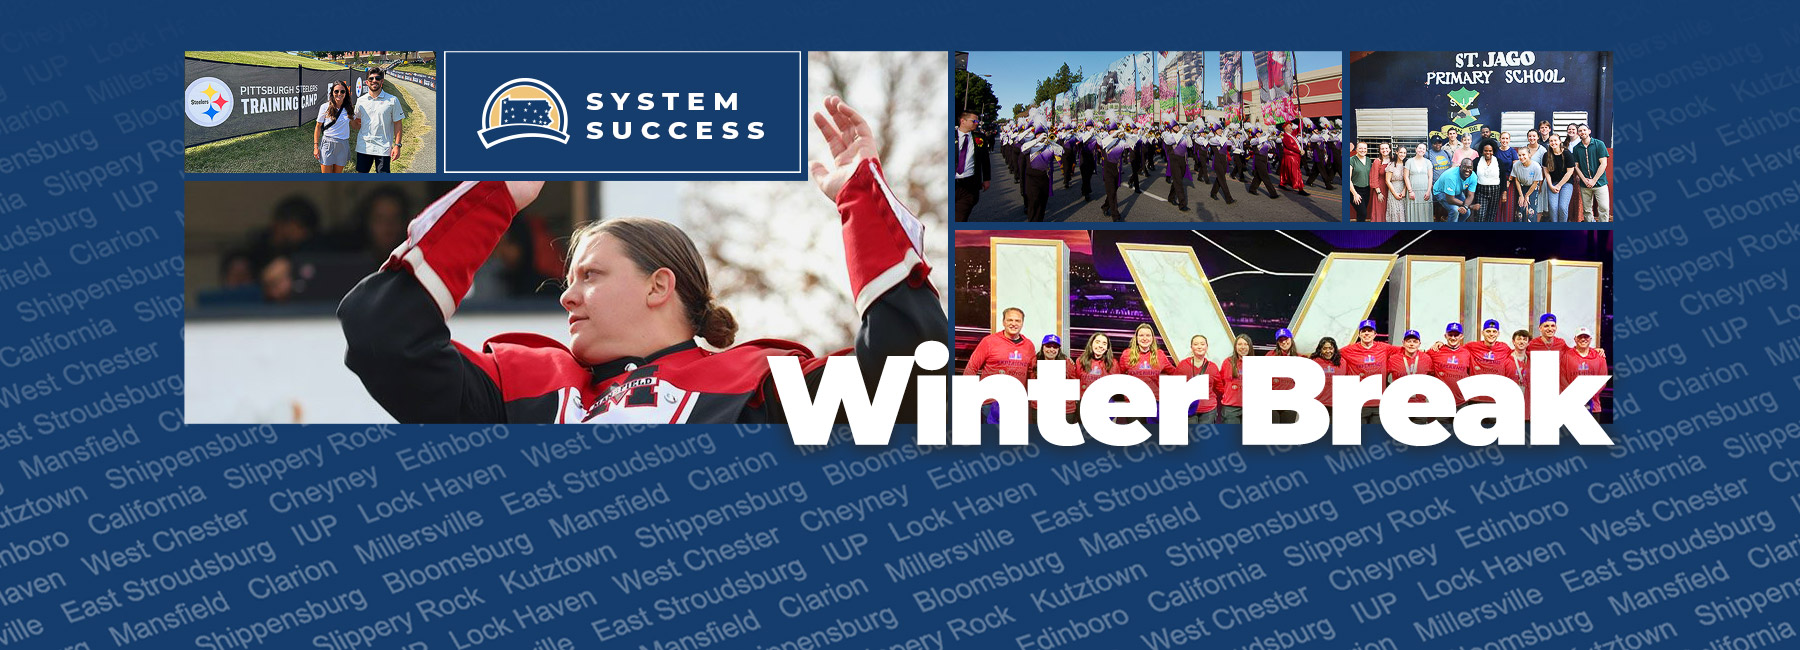 Winter Break - System Success banner